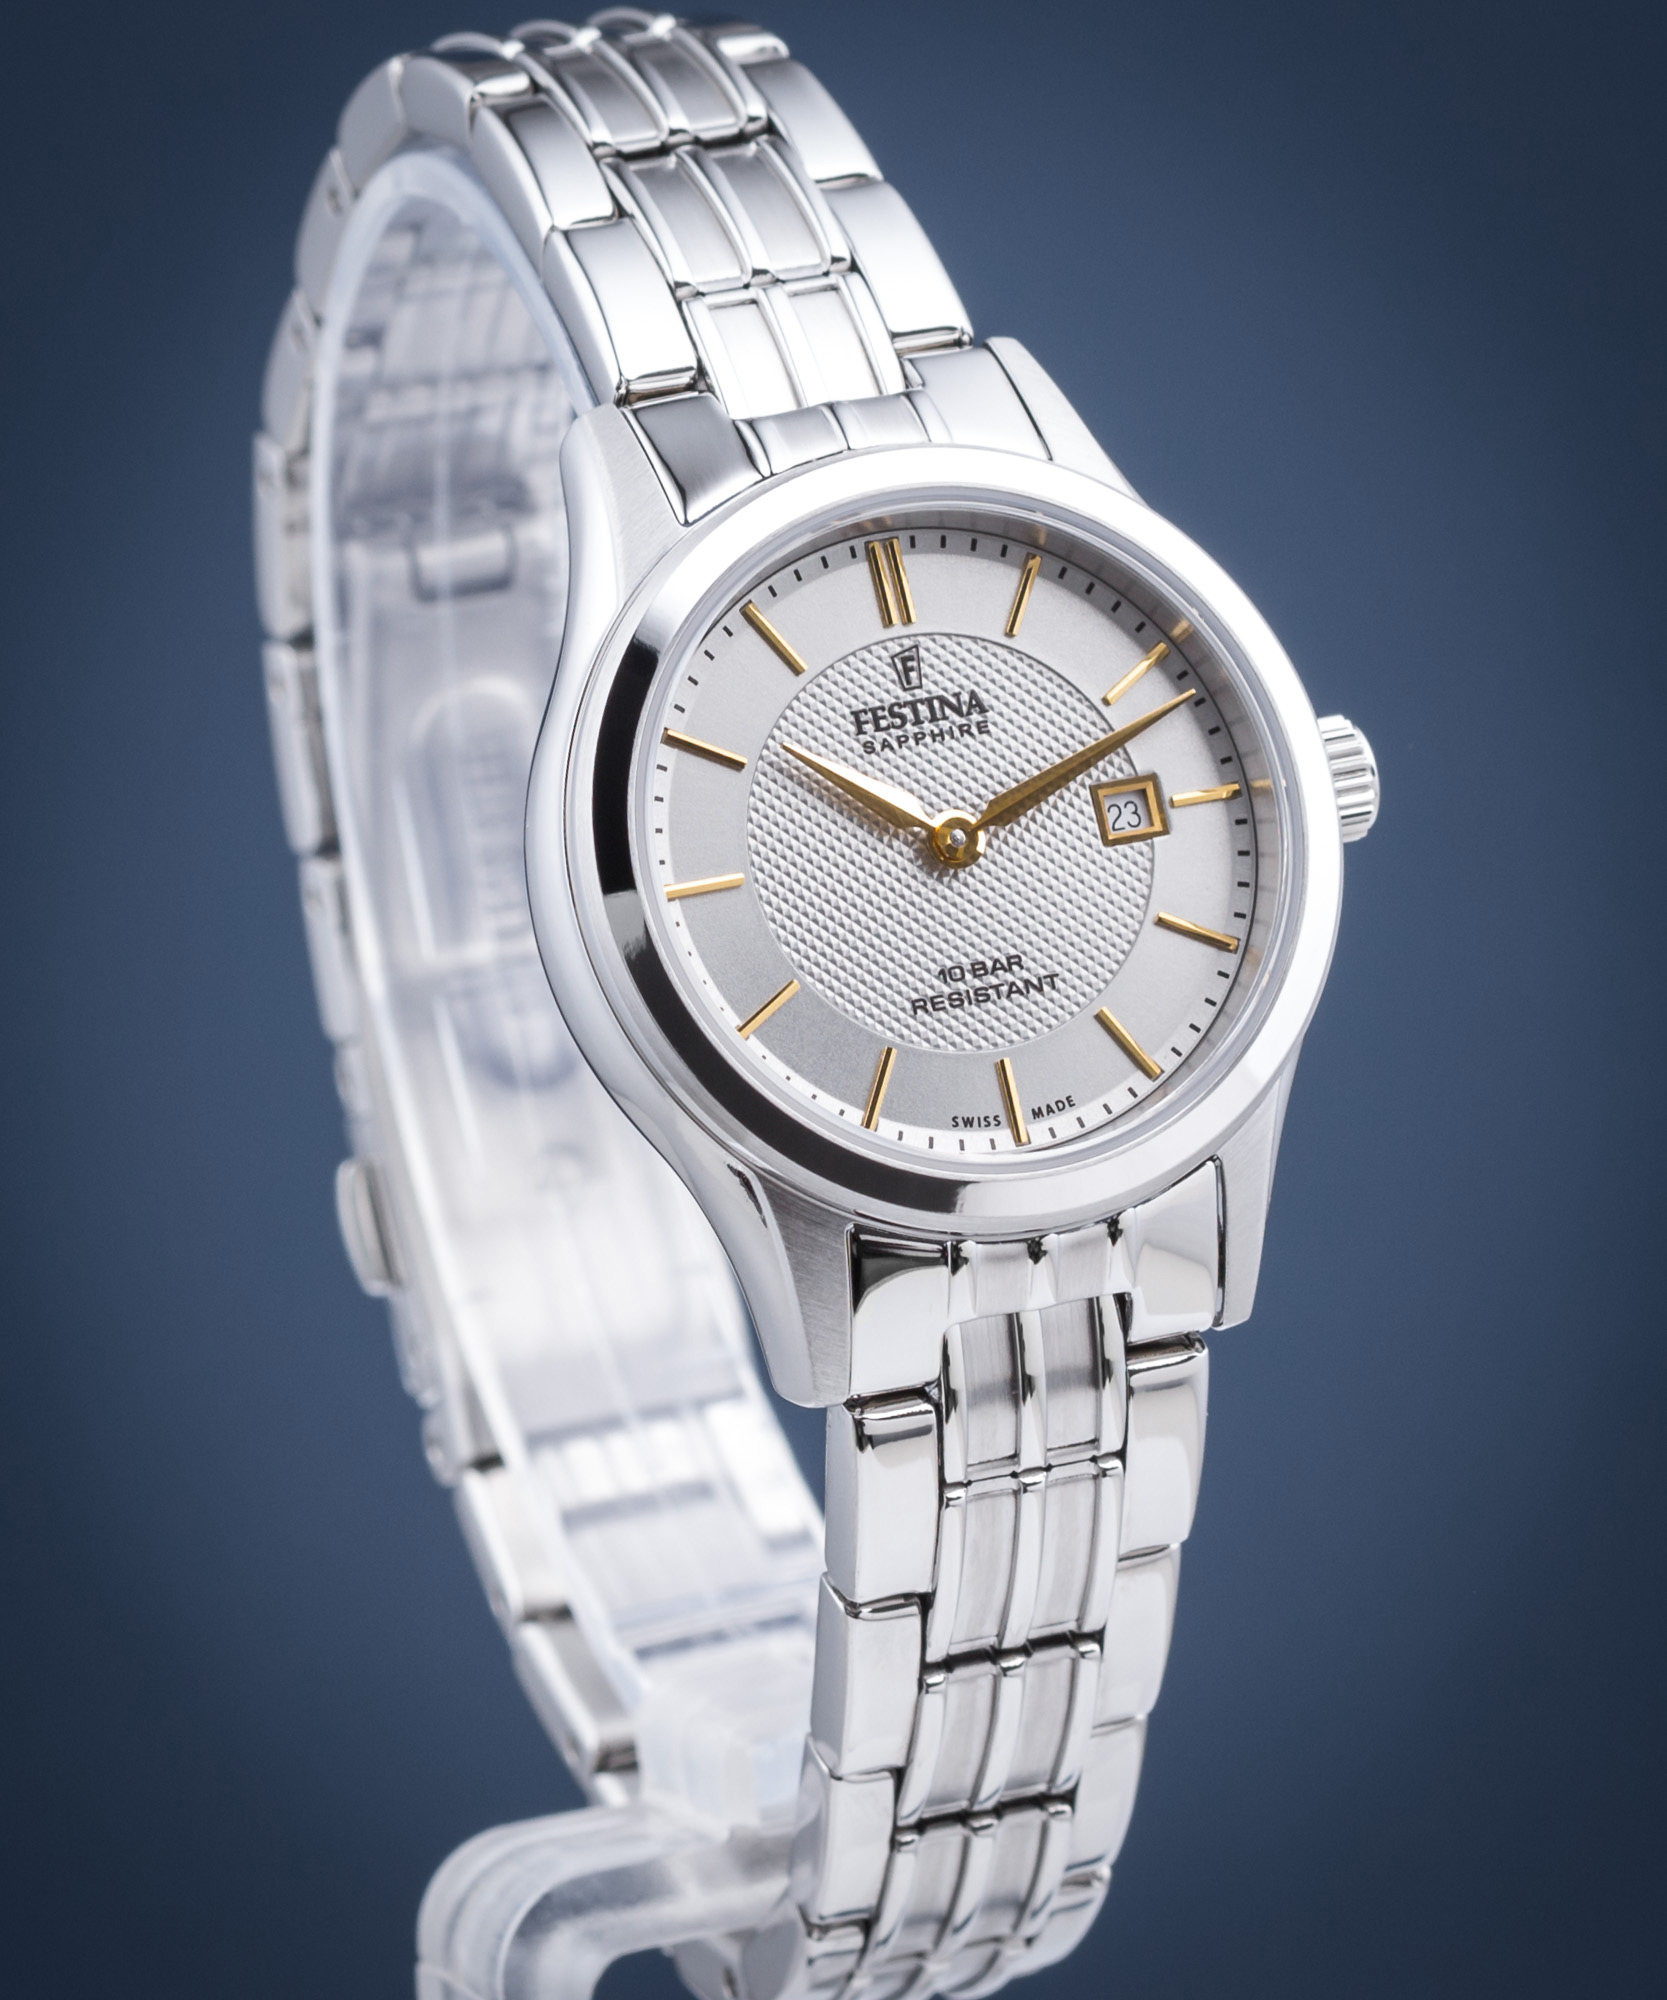 Festina F20006/2 - Made Capsule • Swiss Watch